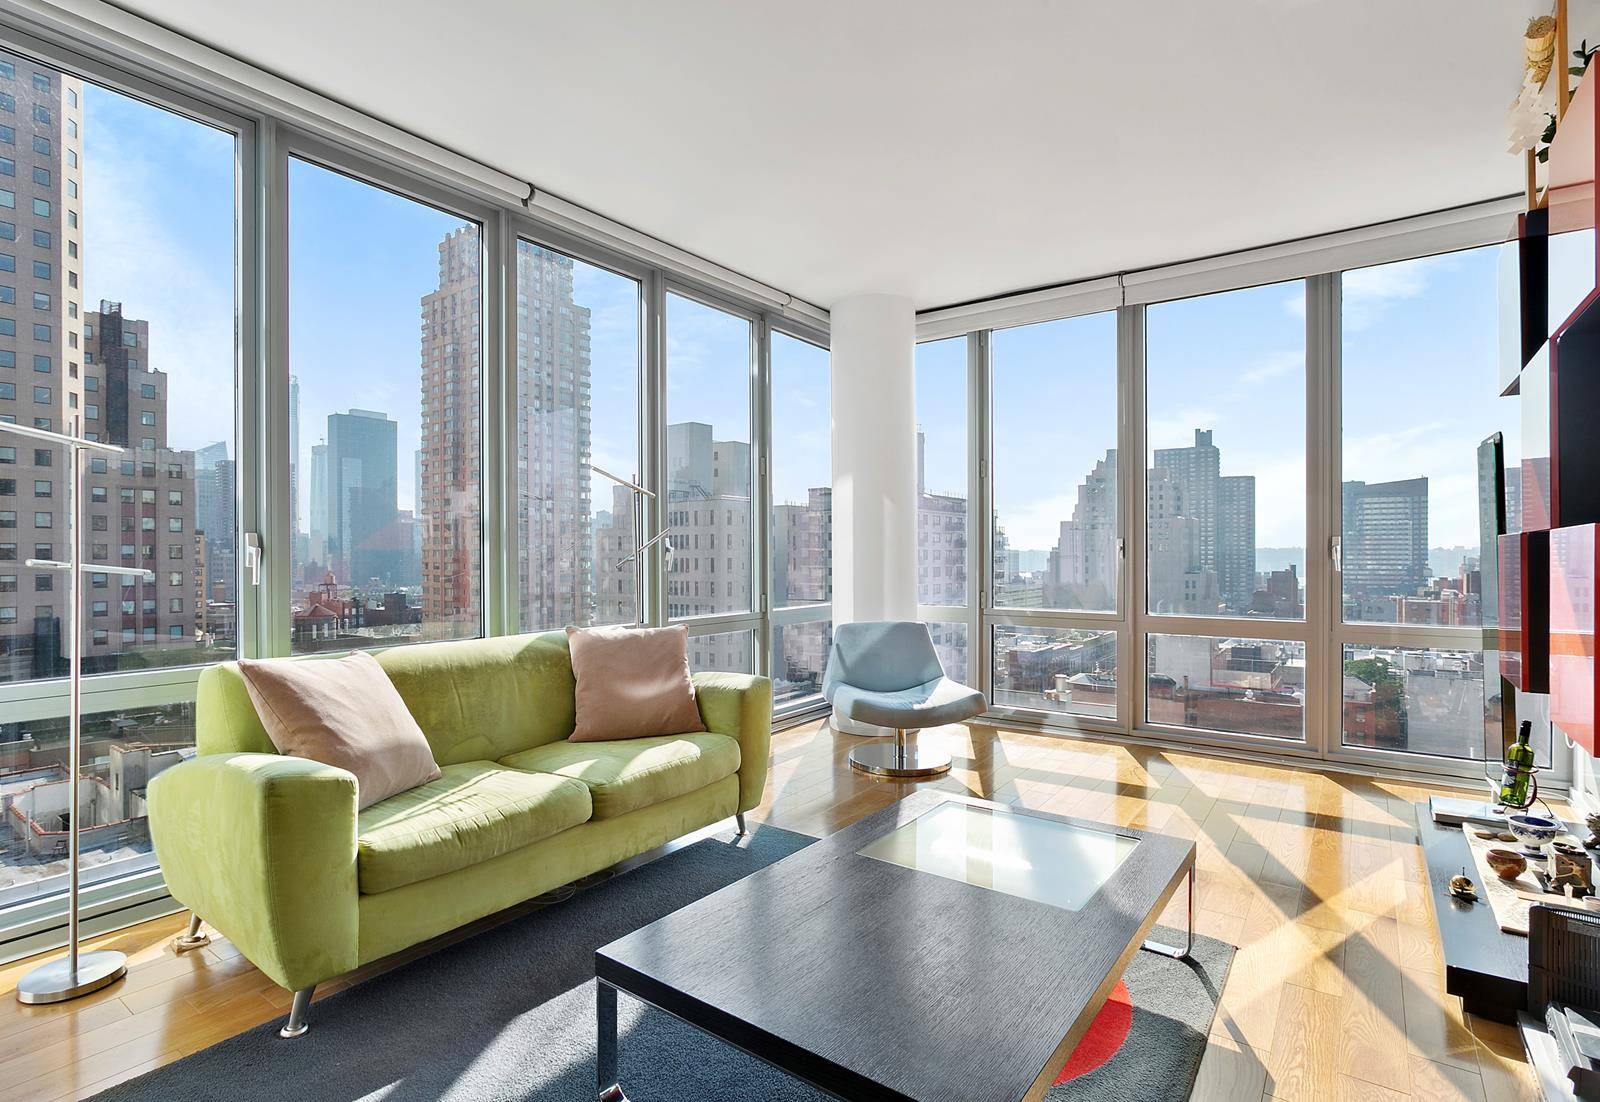 Beautiful 2 bedroom apartment in one of the best buildings in Midtown, Manhattan.